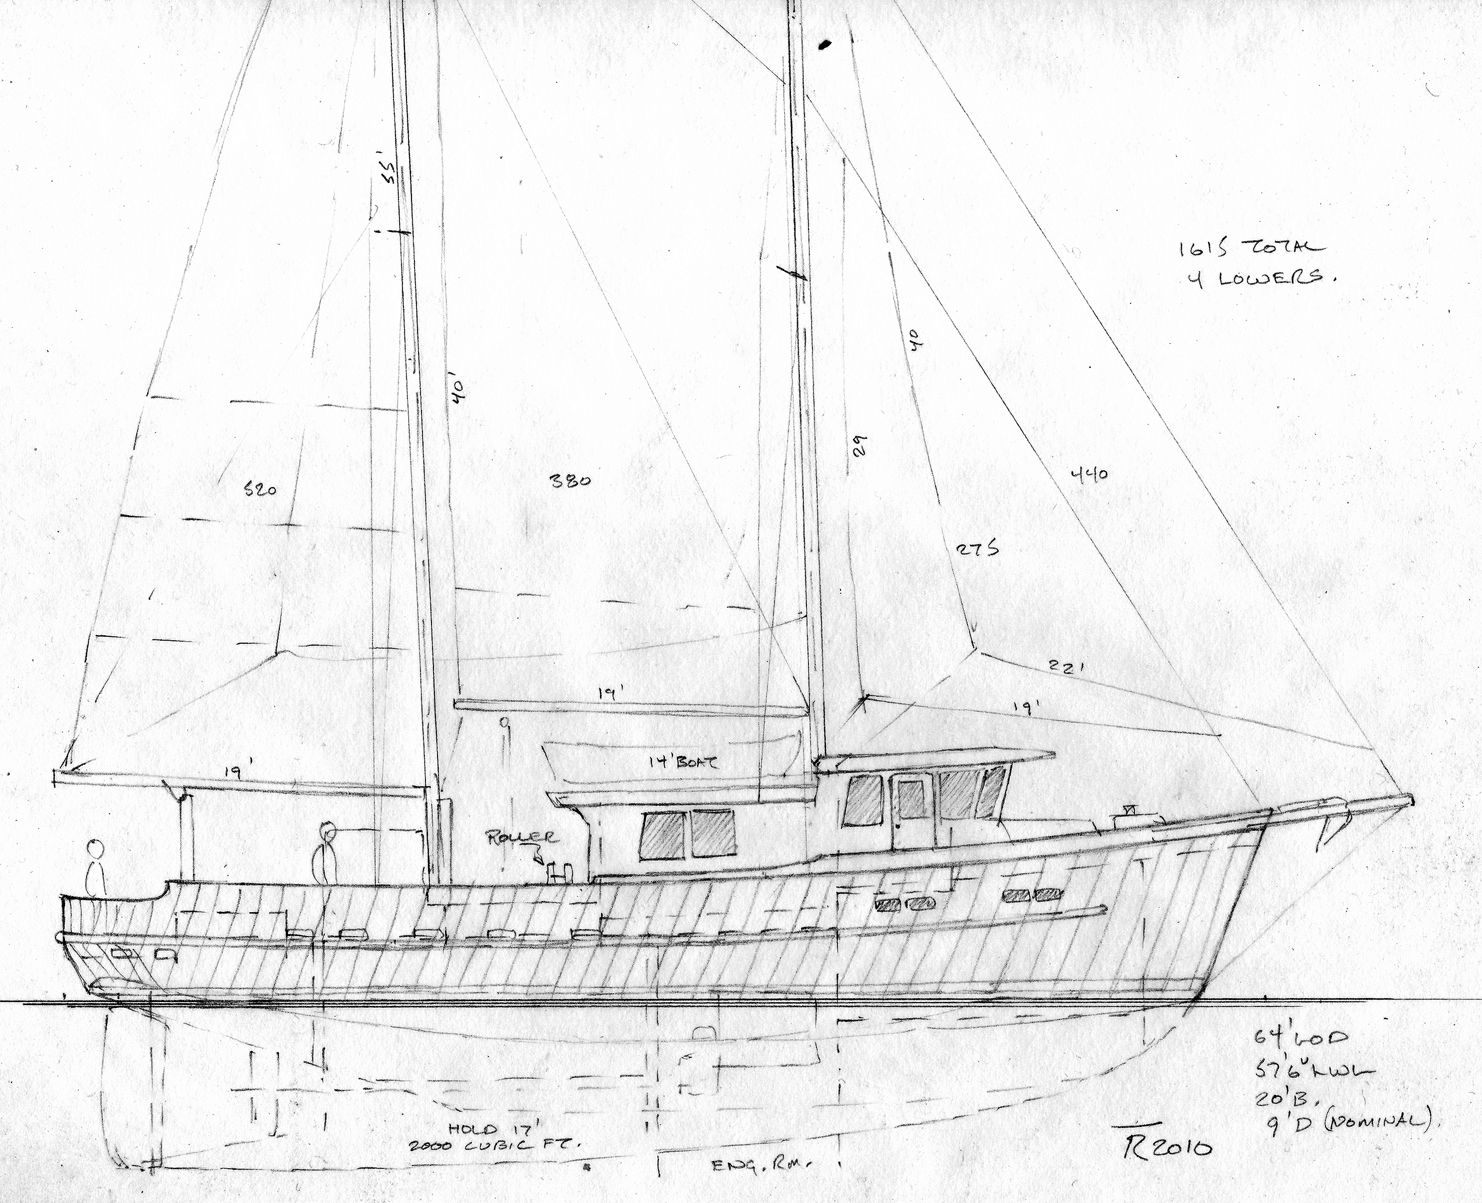 64’ troller fishing schooner ~ Sail Boat Designs by Tad Roberts